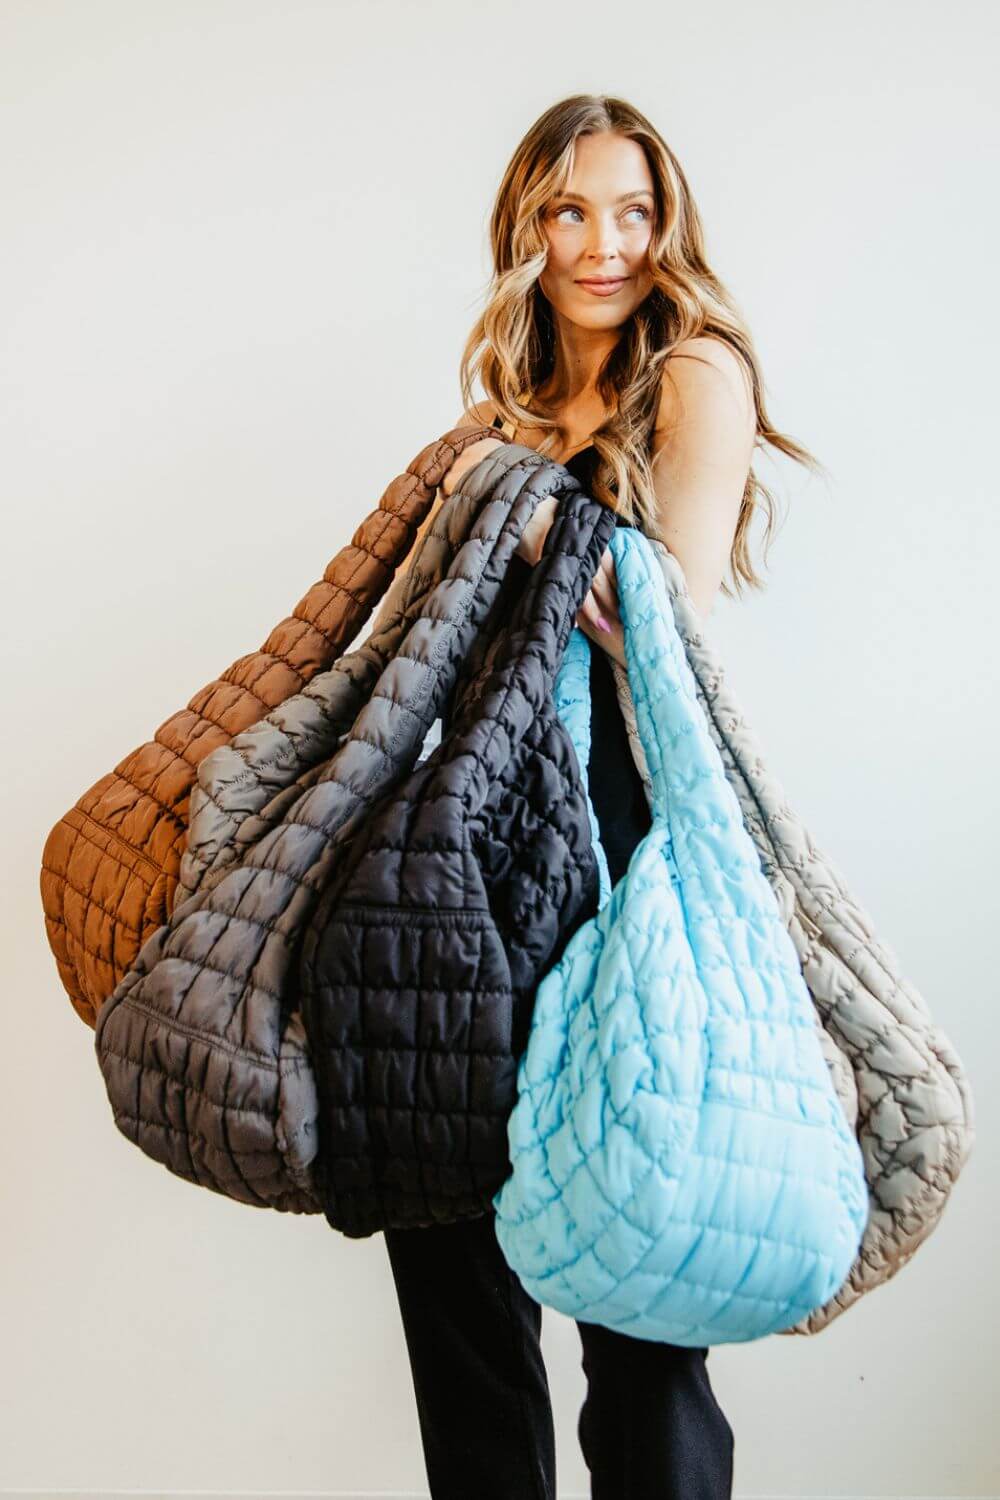 Puffer Bag | NORTVI | Beige | Fashionable, Stylish and Sustainable